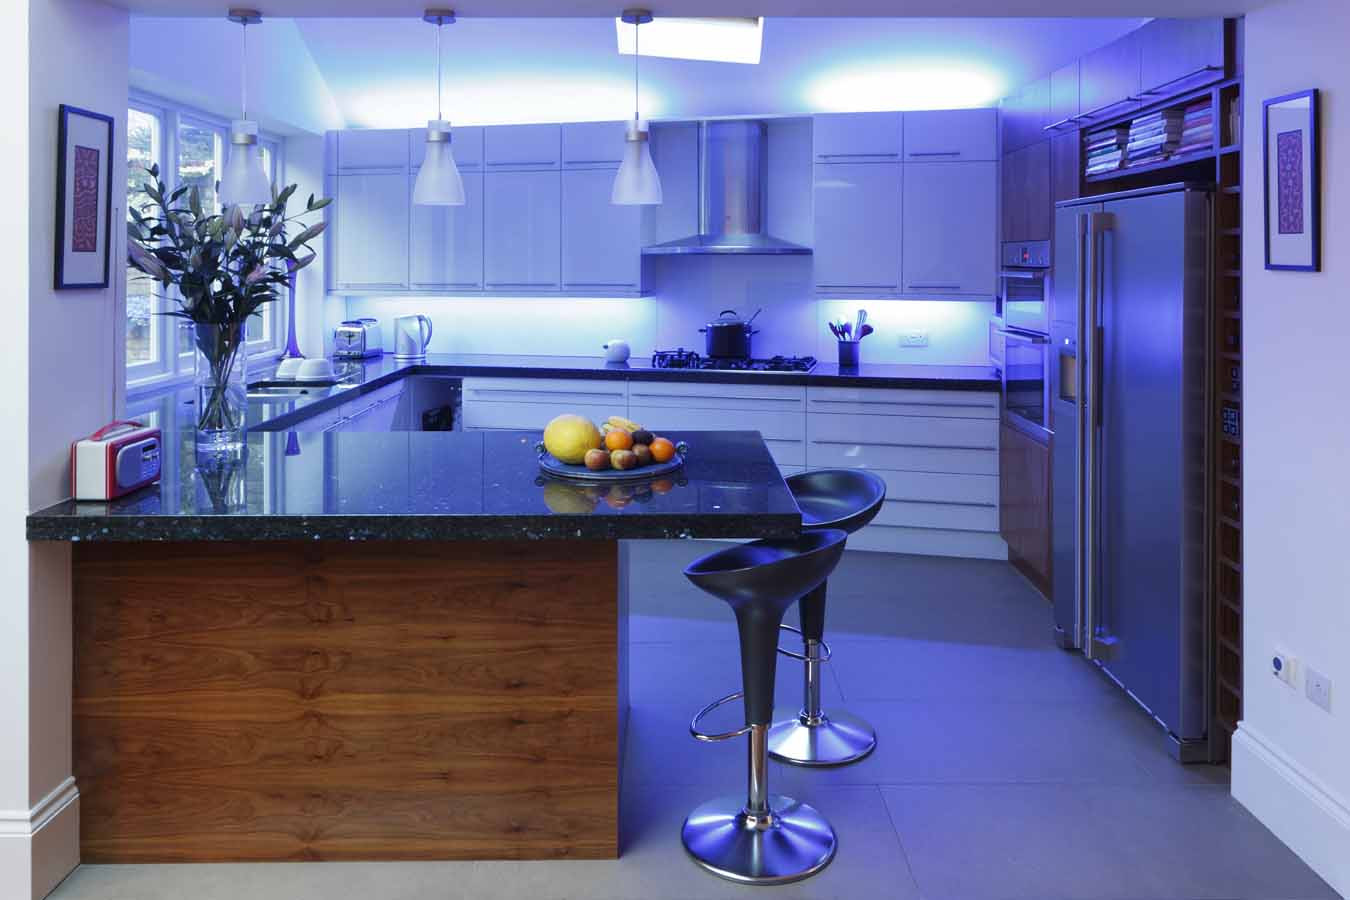 28x28 led light kitchen